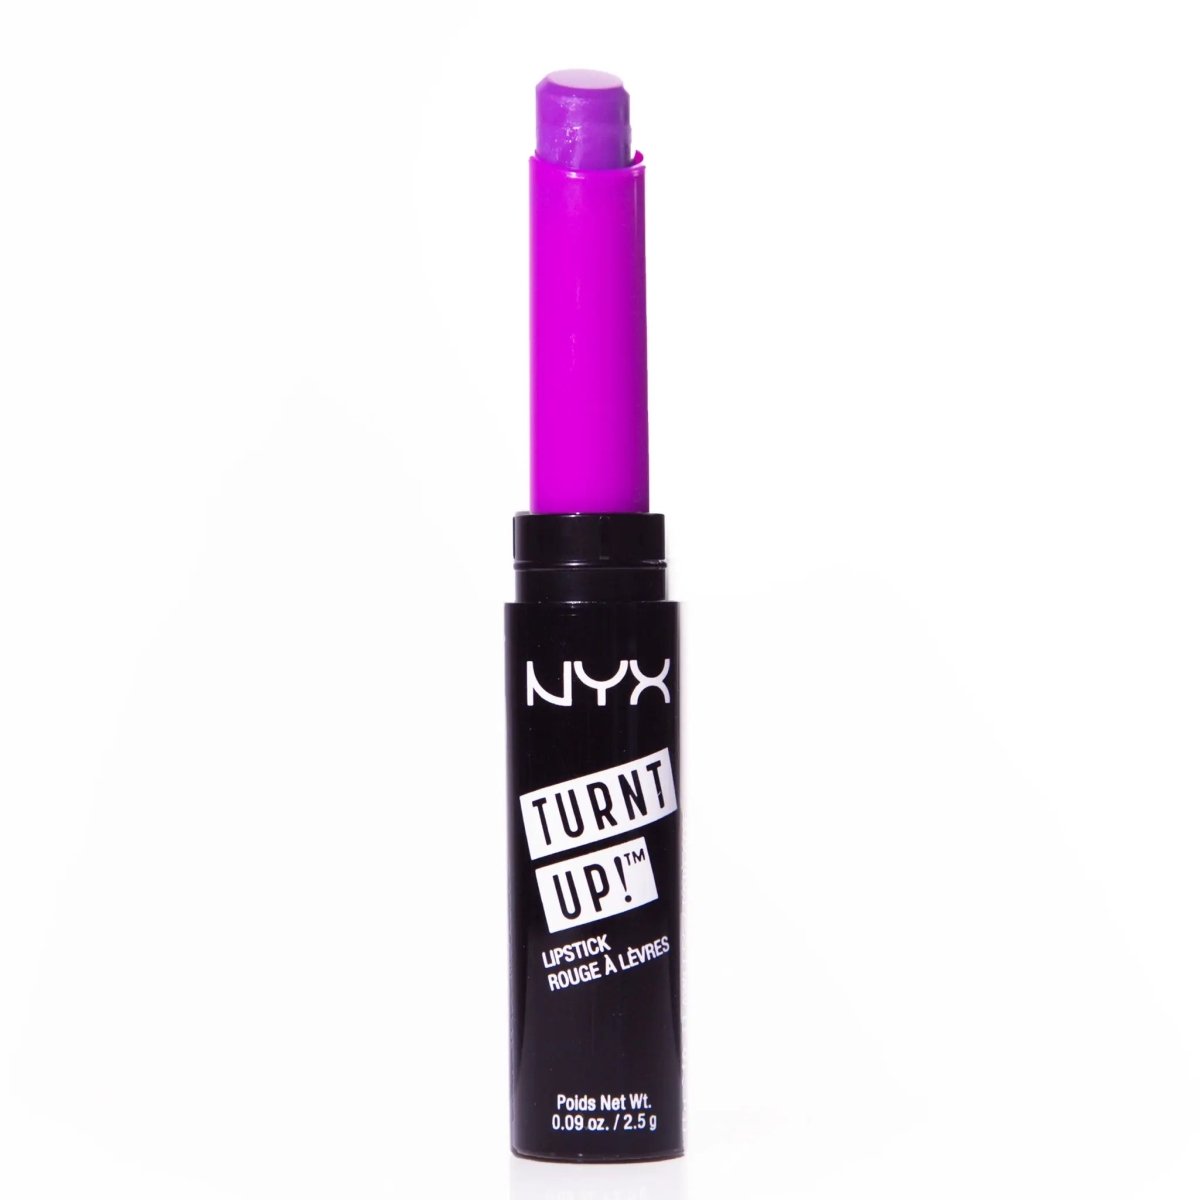 Image of NYX Turnt Up! Lipstick 2.5g